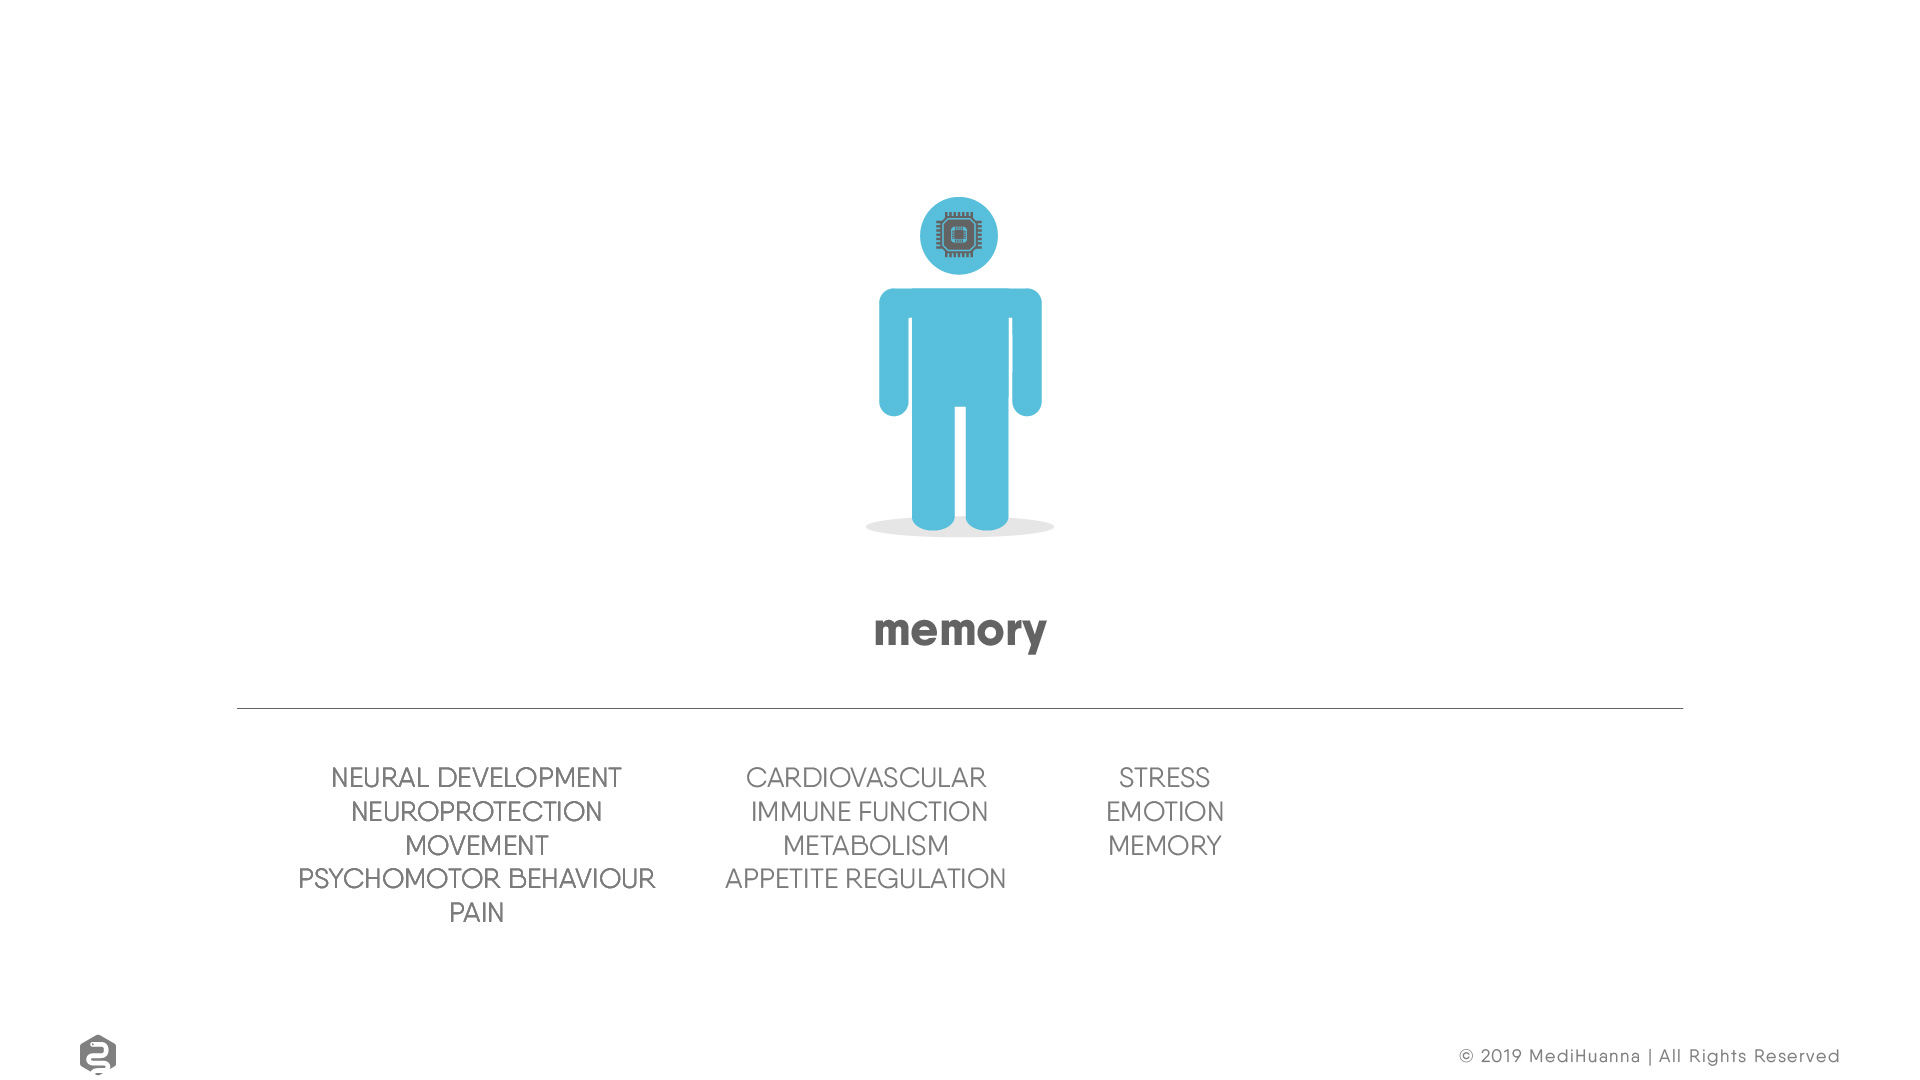 Neural development, memory